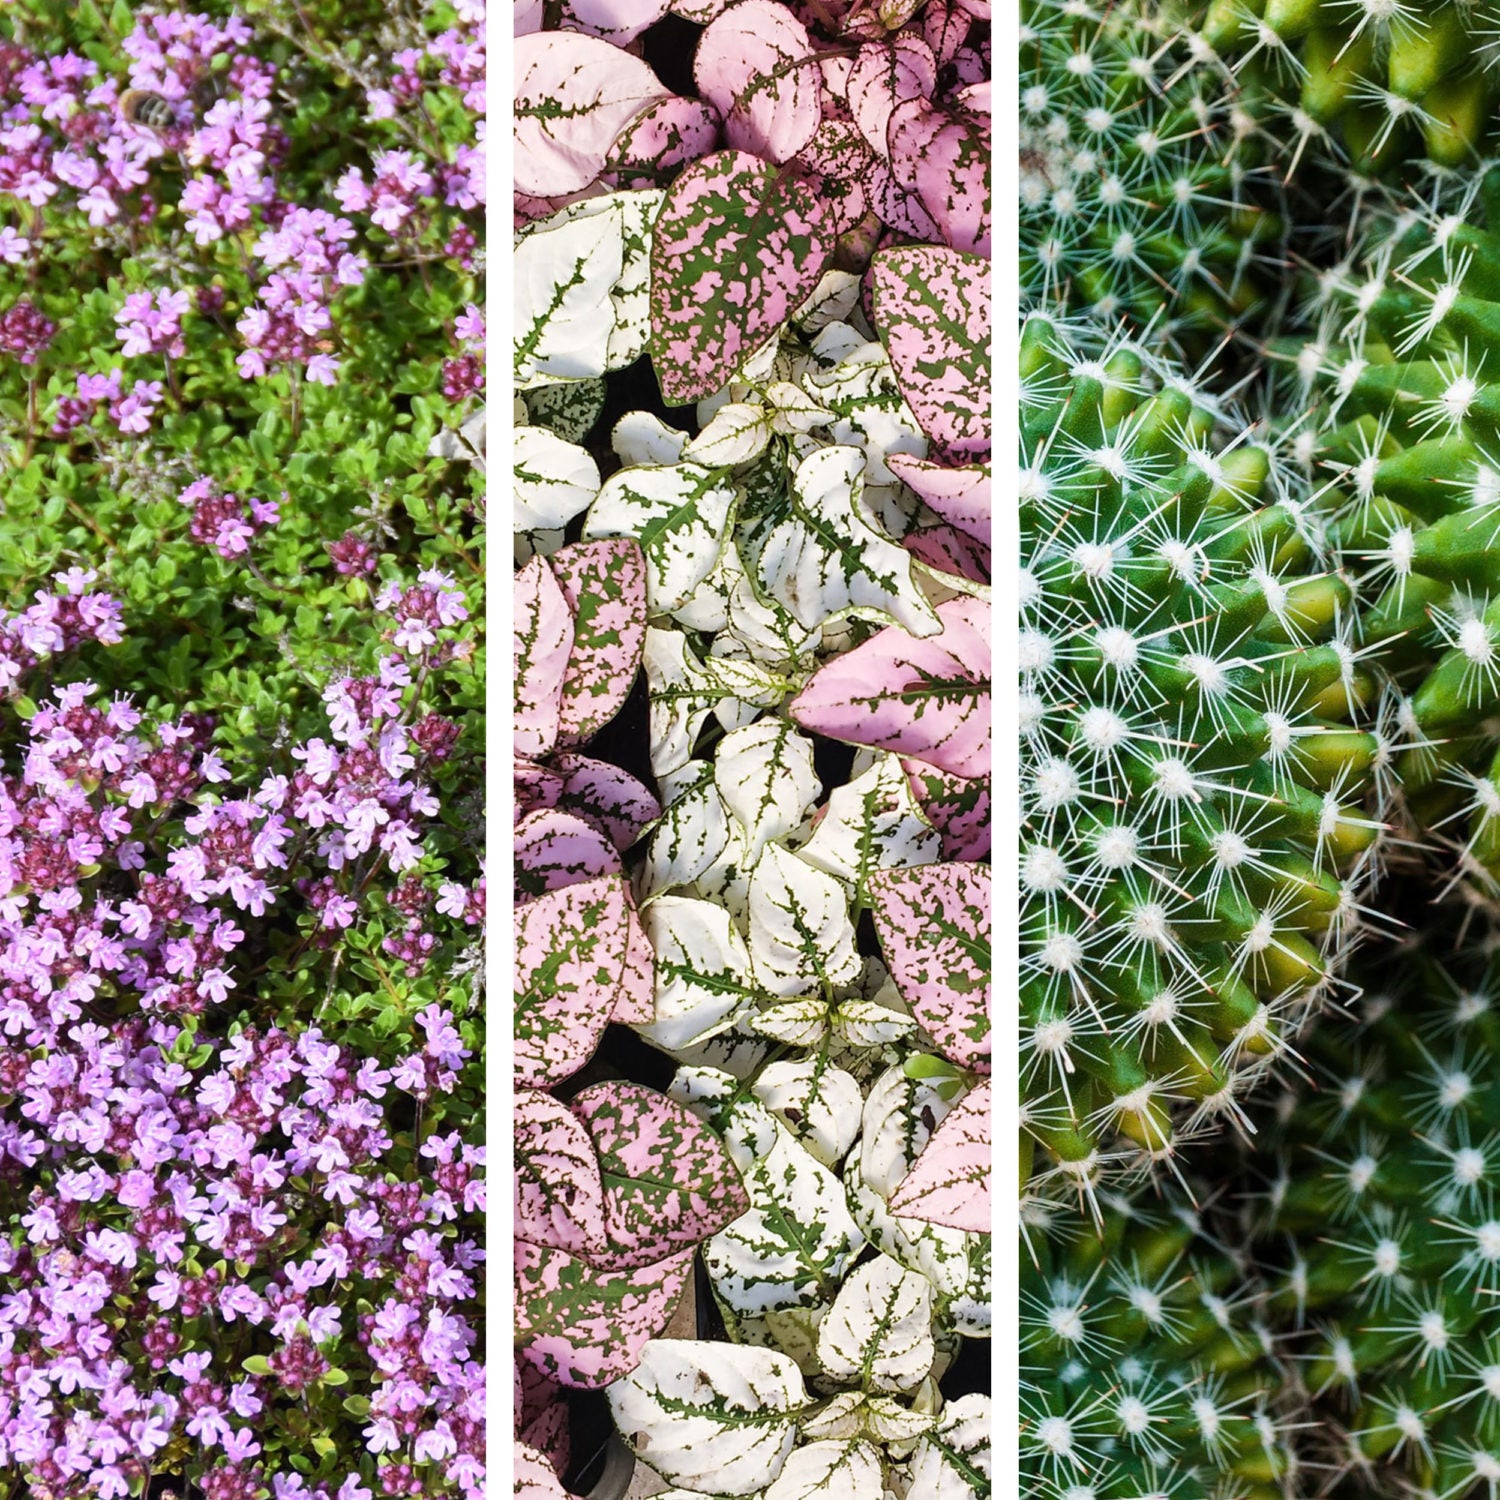 Cactus Mini Basin Grow Kit – Buzzy Seeds